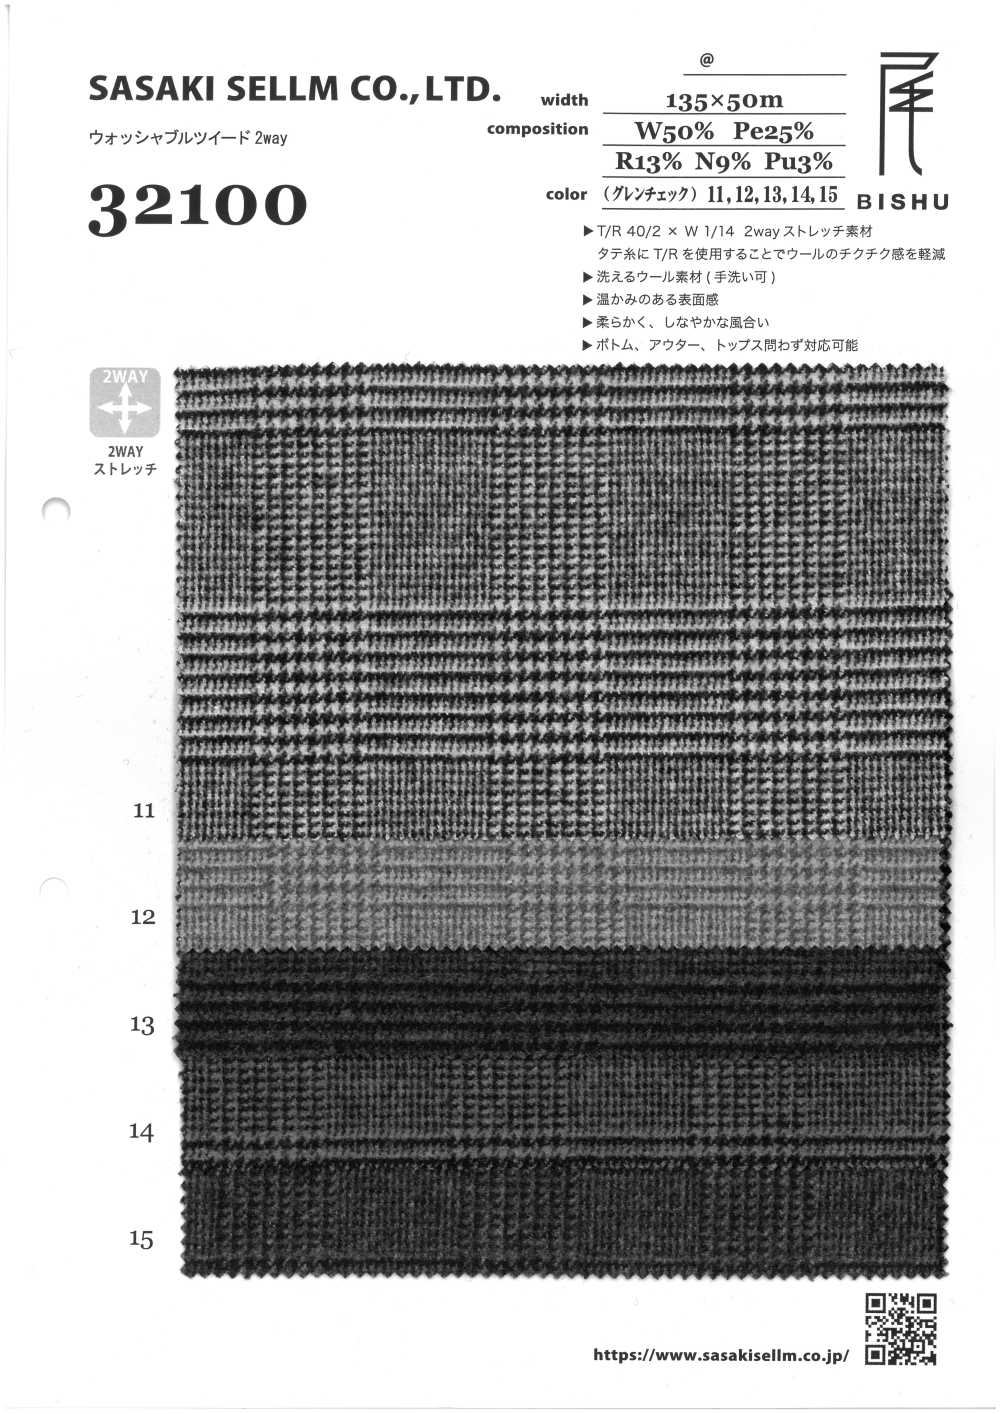 32100-10 Washable Tweed 2WAY Glen Check[Textile / Fabric] SASAKISELLM